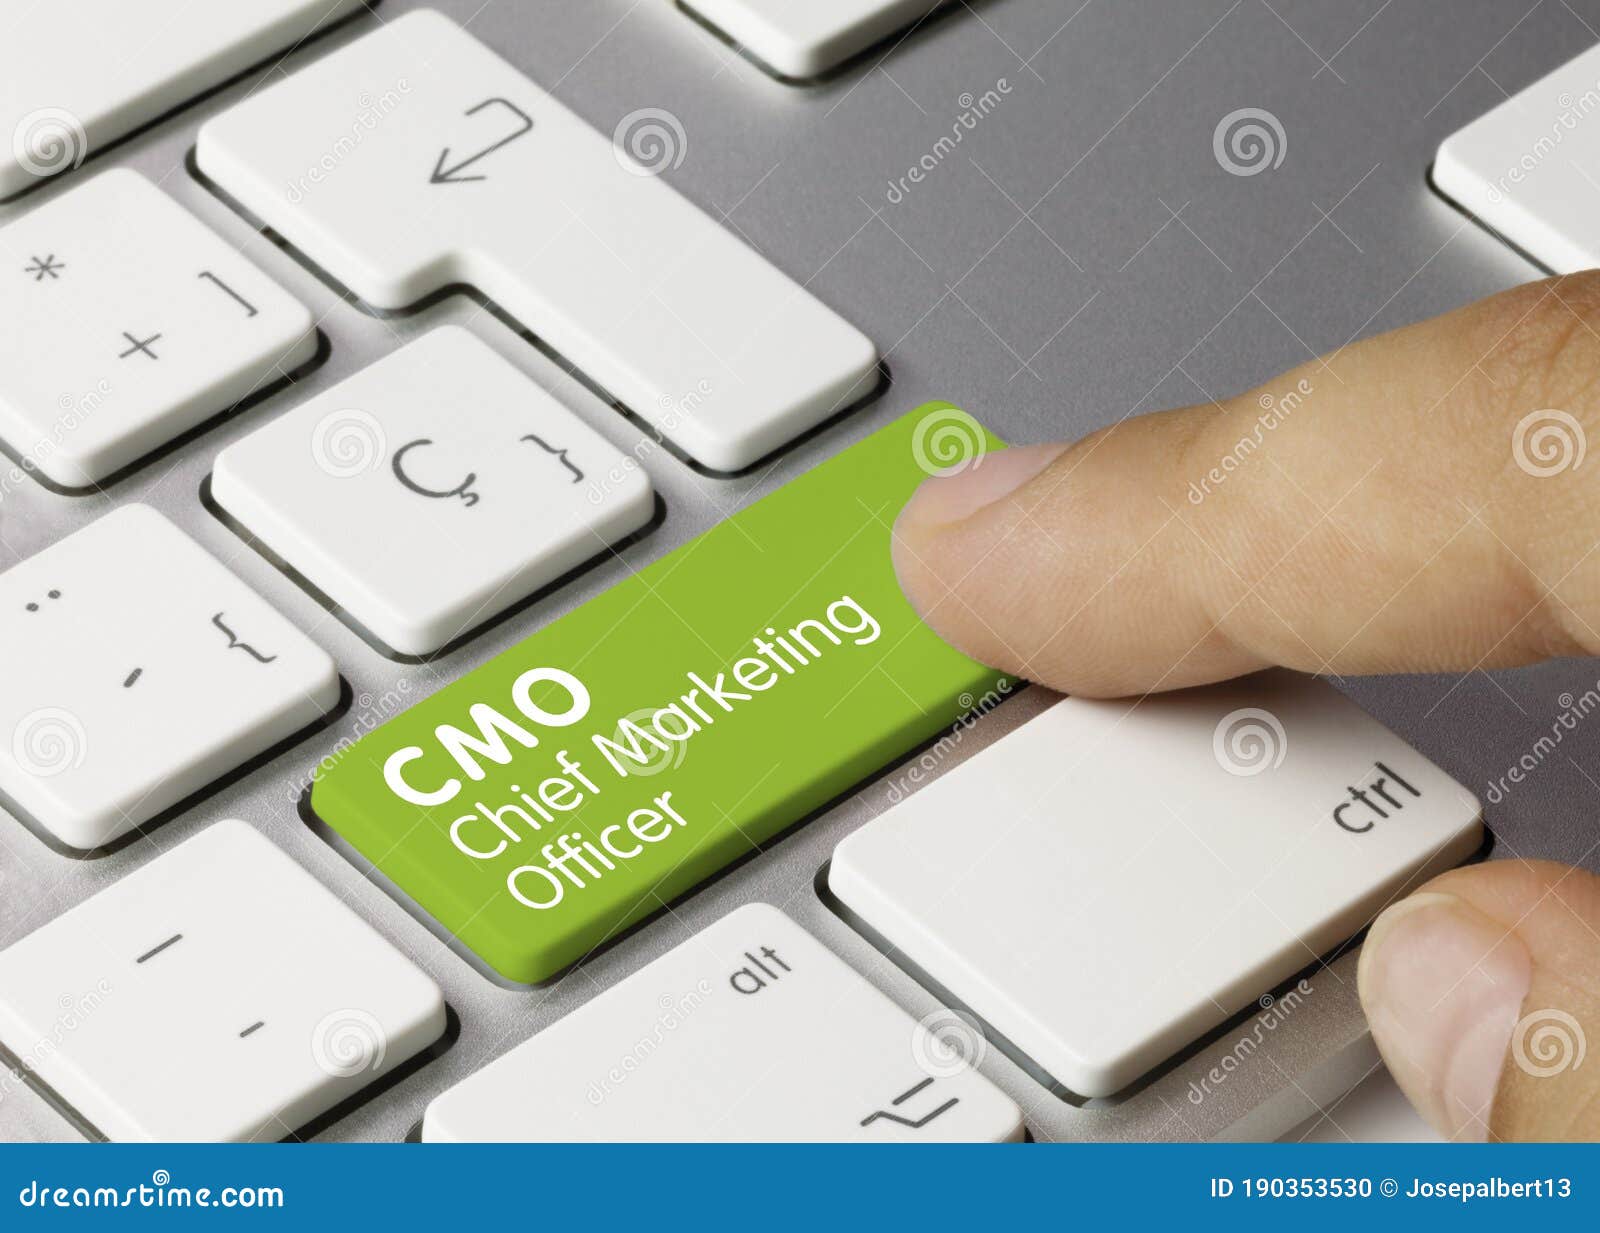 cmo chief marketing officer. - inscription on green keyboard key